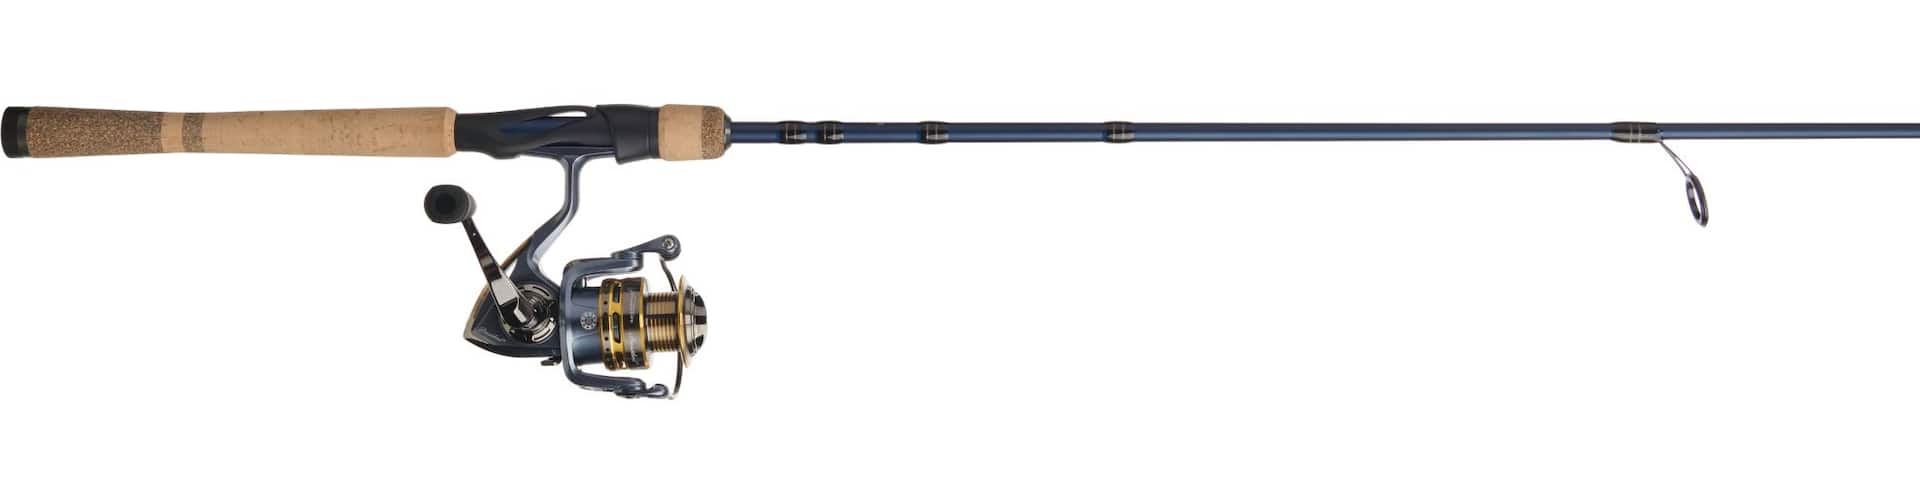 Posi Charge Racer Mesh Cap (Royal Blue) - Fishing Rod Holders